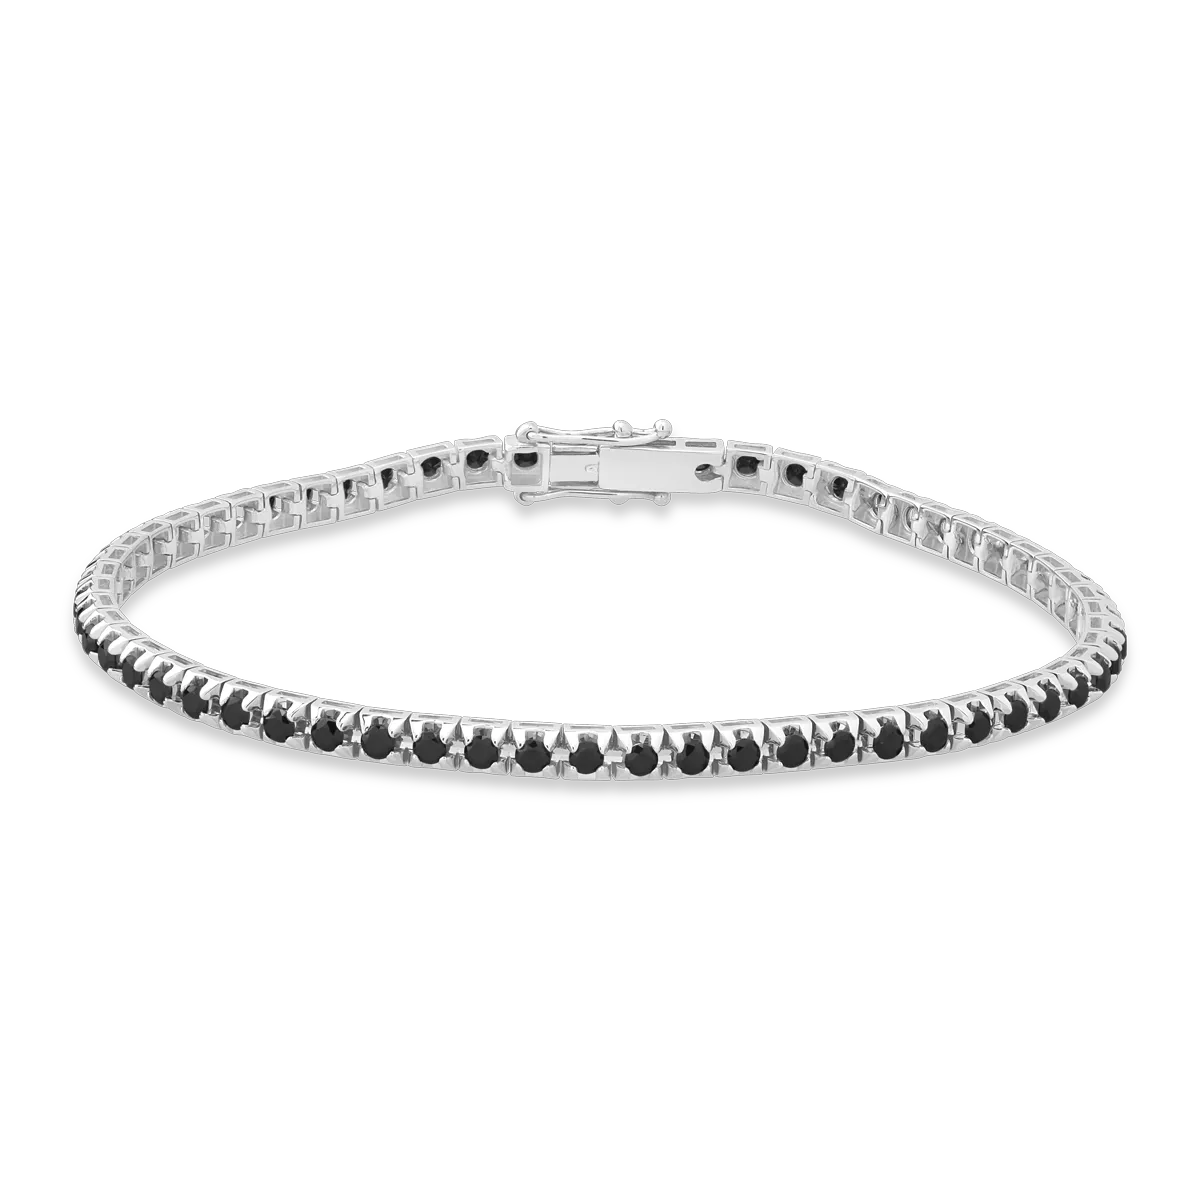 18K white gold tennis bracelet with 3.8ct black diamonds